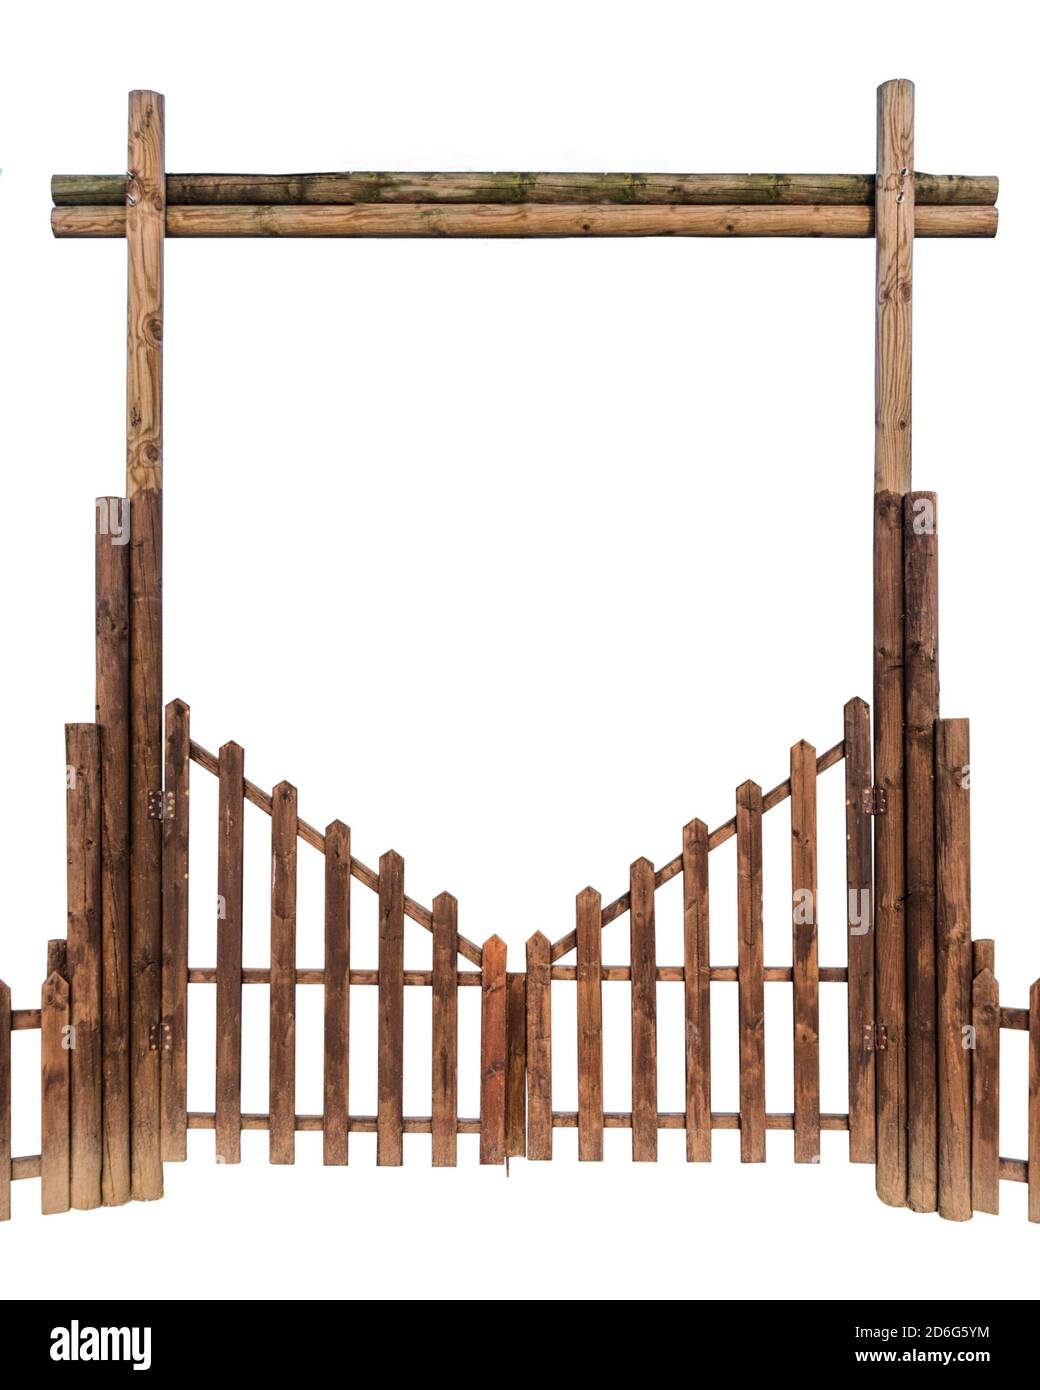 Wooden fence gate isolated on white background Stock Photo